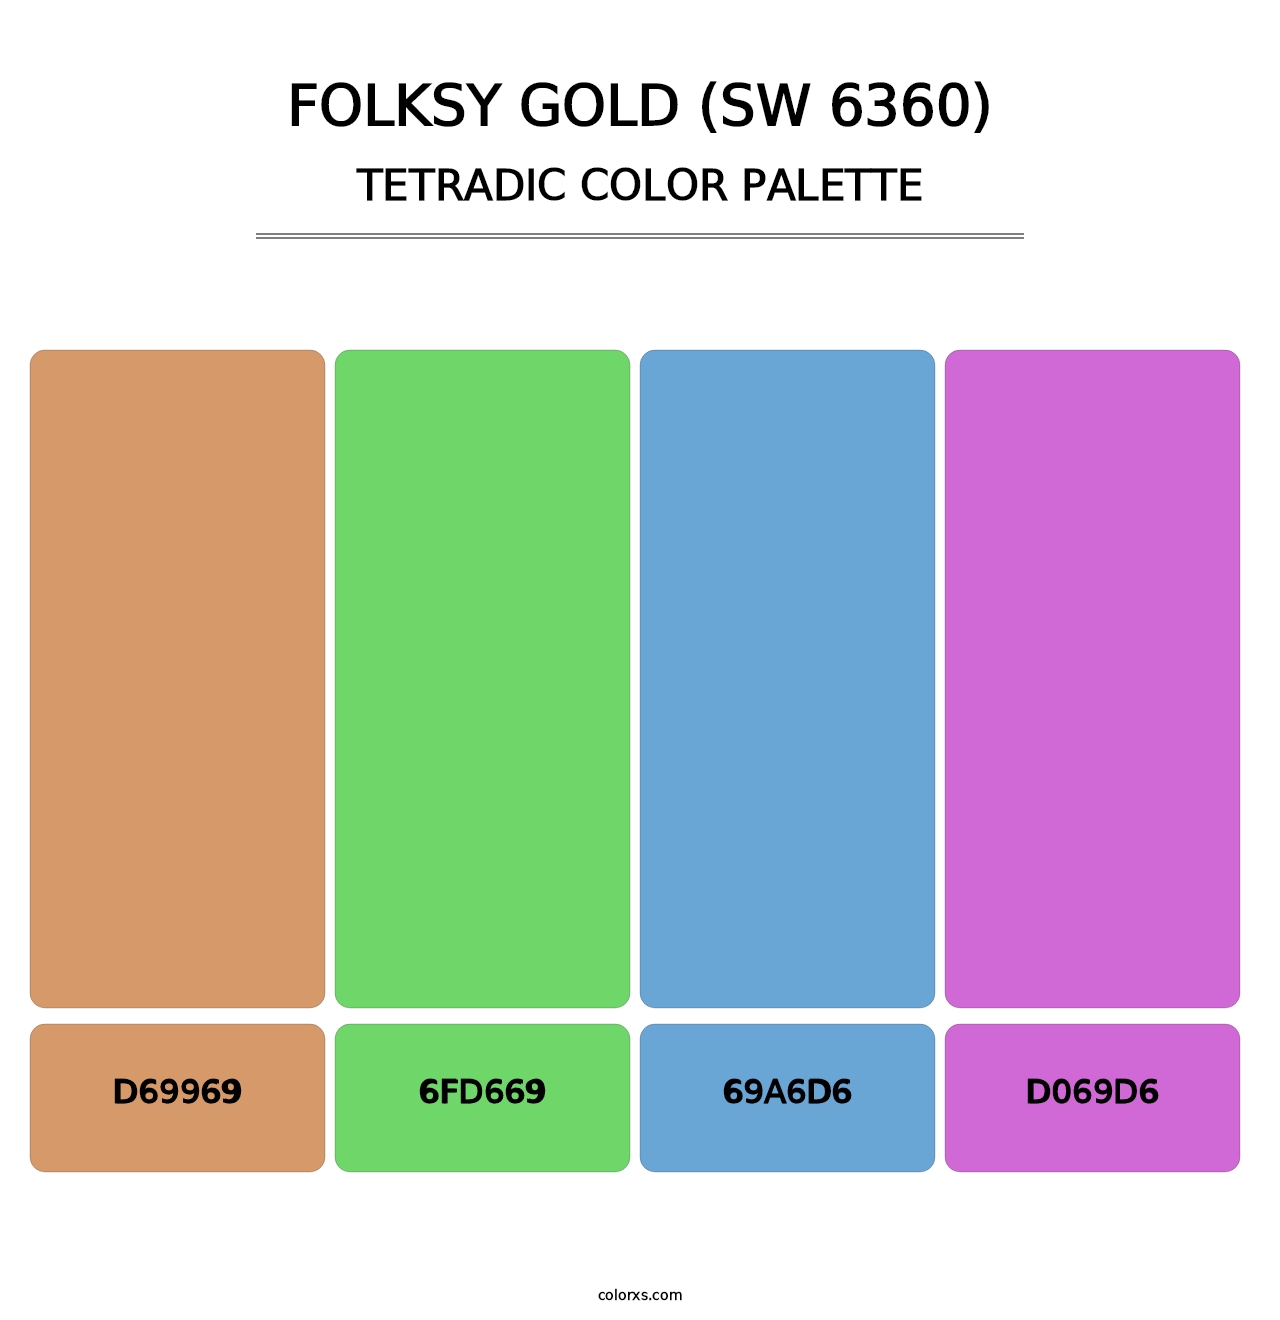 Folksy Gold (SW 6360) - Tetradic Color Palette